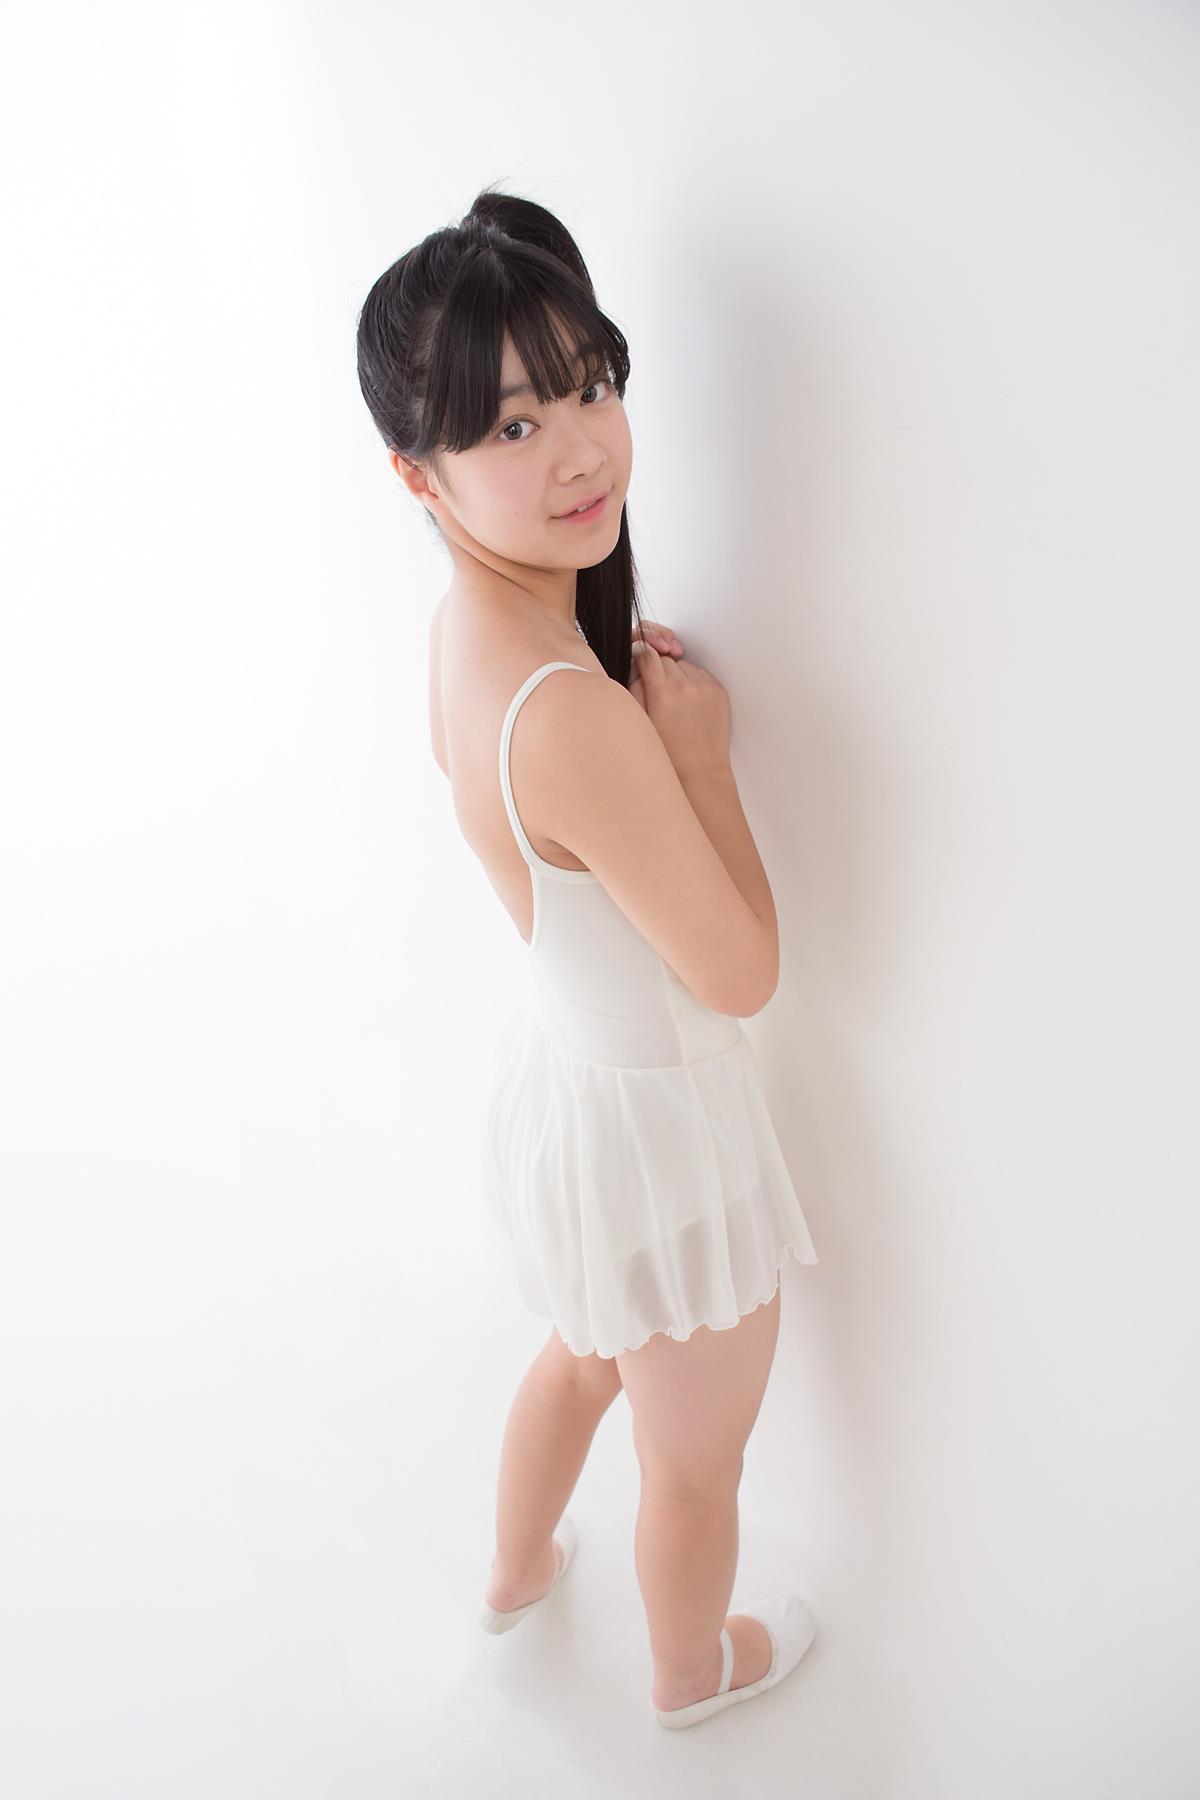 Minisuka.tv Saria Natsume 夏目咲莉愛 - Premium Gallery 2.2 - 40.jpg